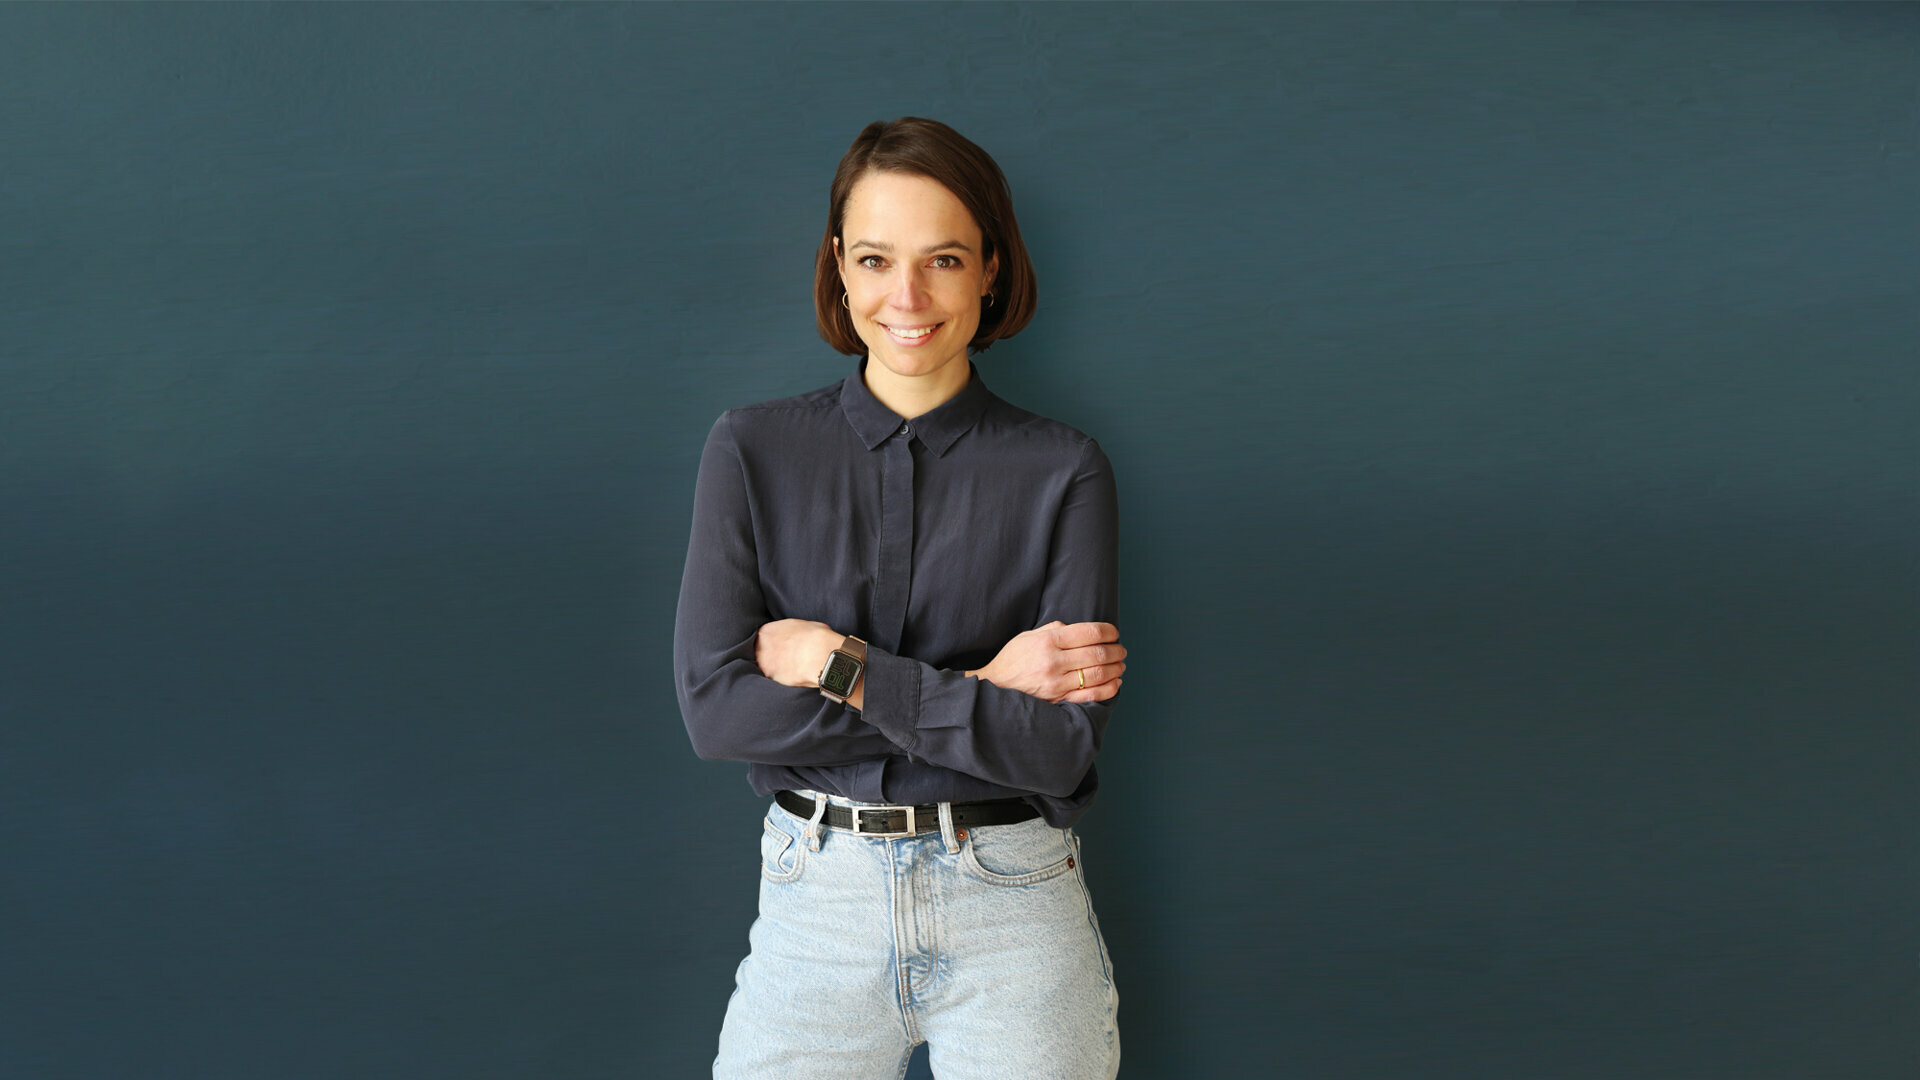 Mulheres na Odontologia: ouça Eva-Maria Meijnen, co-CEO PlusDental